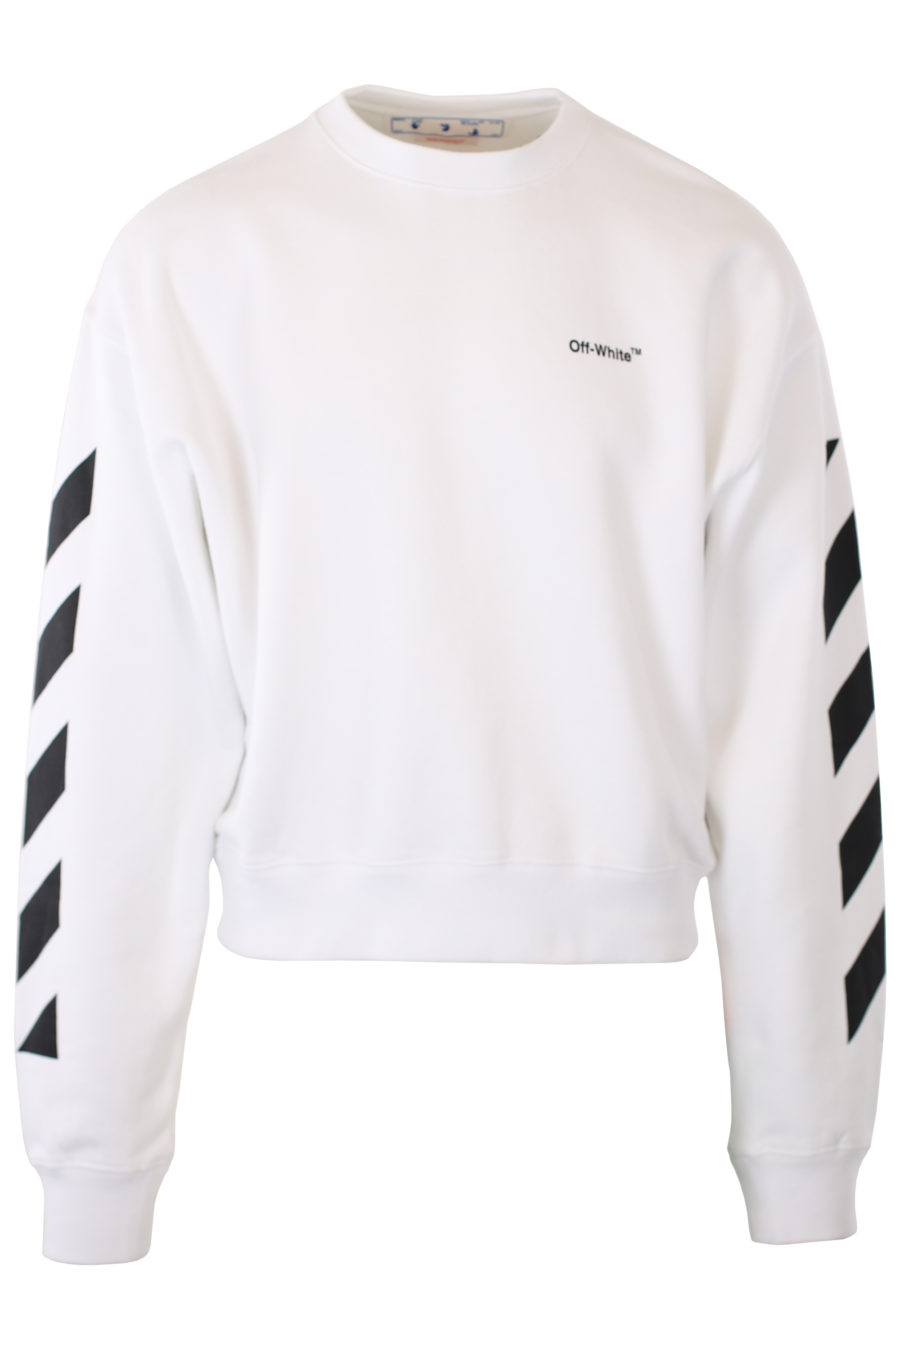 White sweatshirt with logo and diagonal stripes on sleeves - IMG 2363